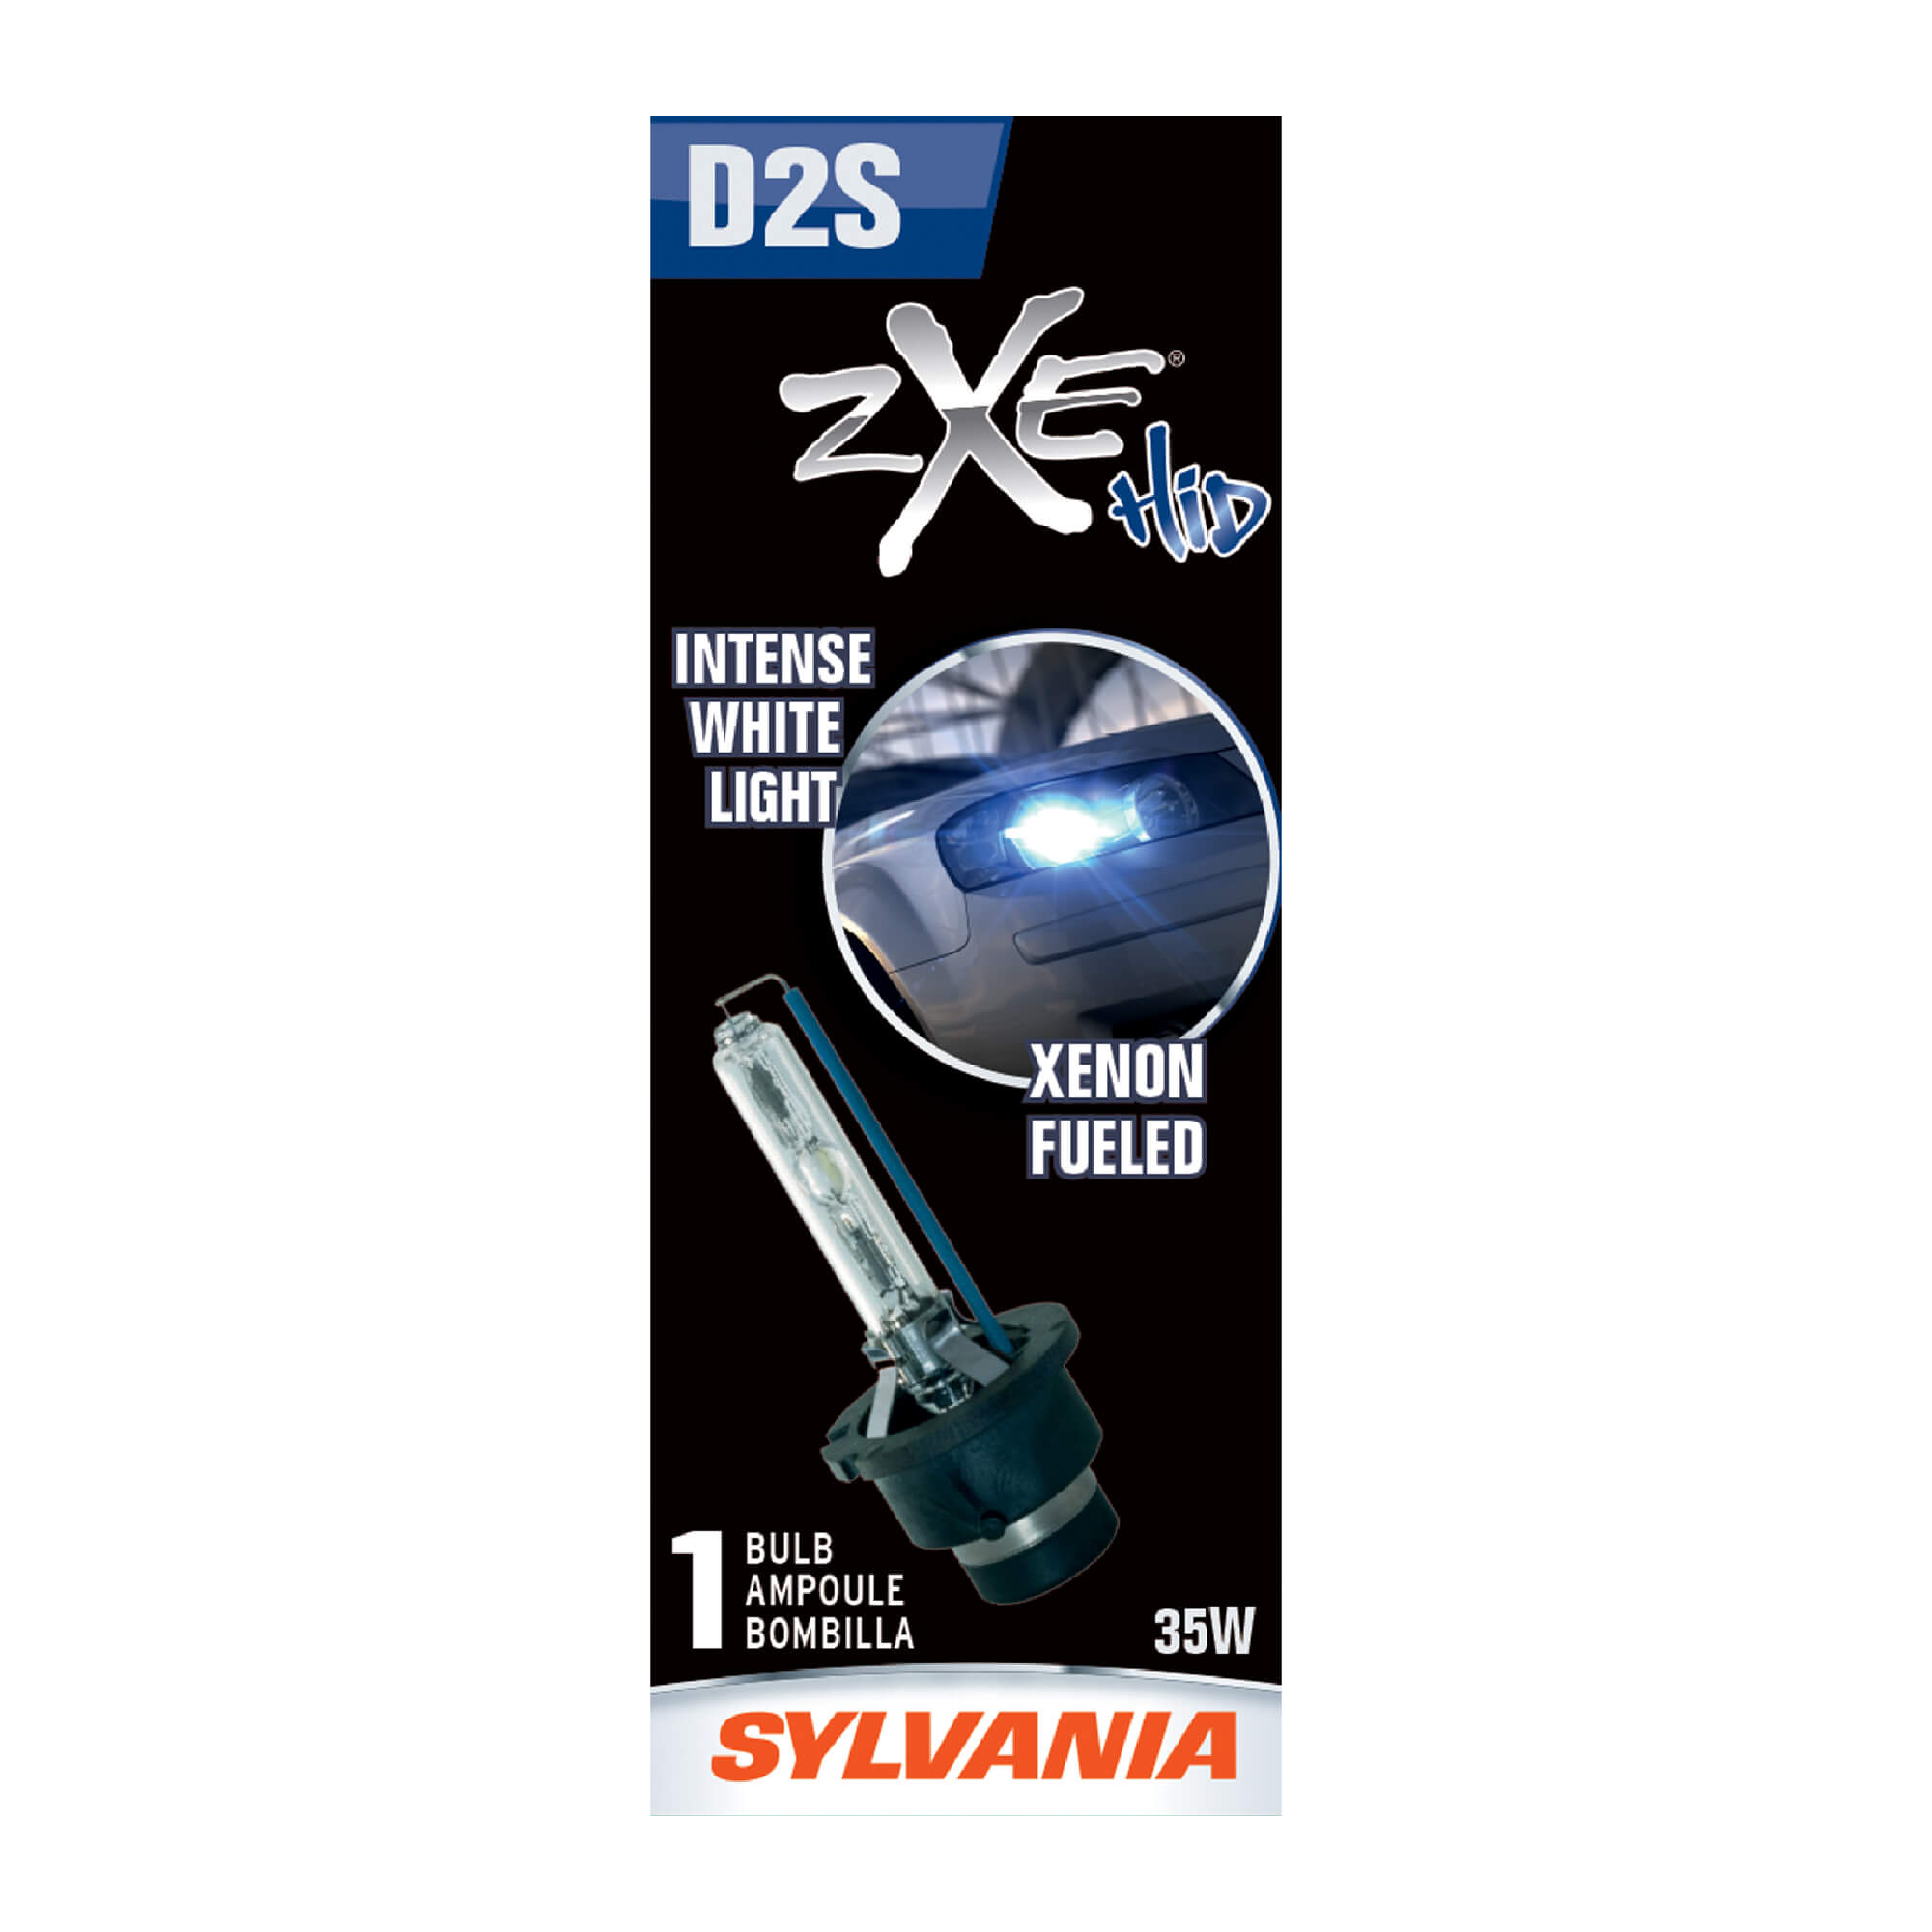 SYLVANIA D2S SilverStar zXe HID Headlight Bulb, 1 Pack